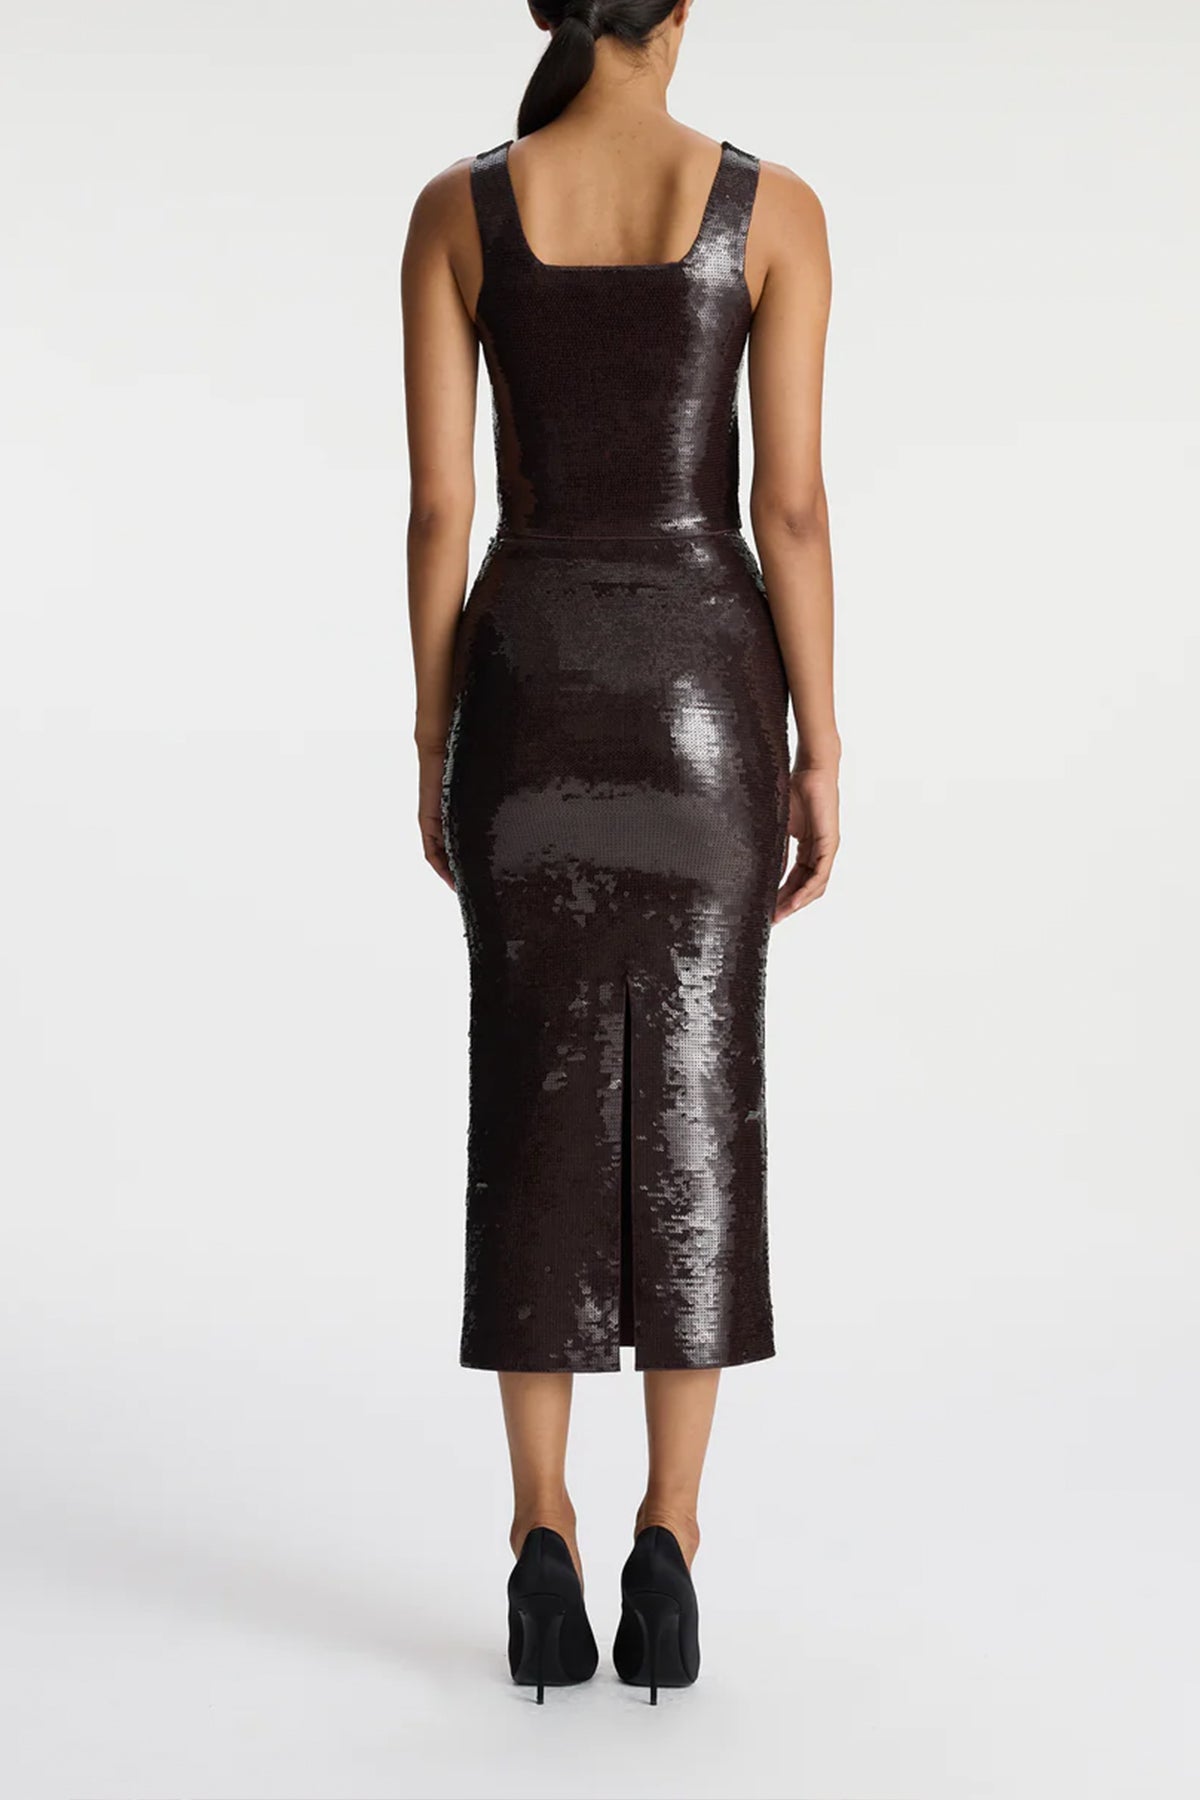 Joan Sequin Knit Skirt in Dark Brown - shop-olivia.com